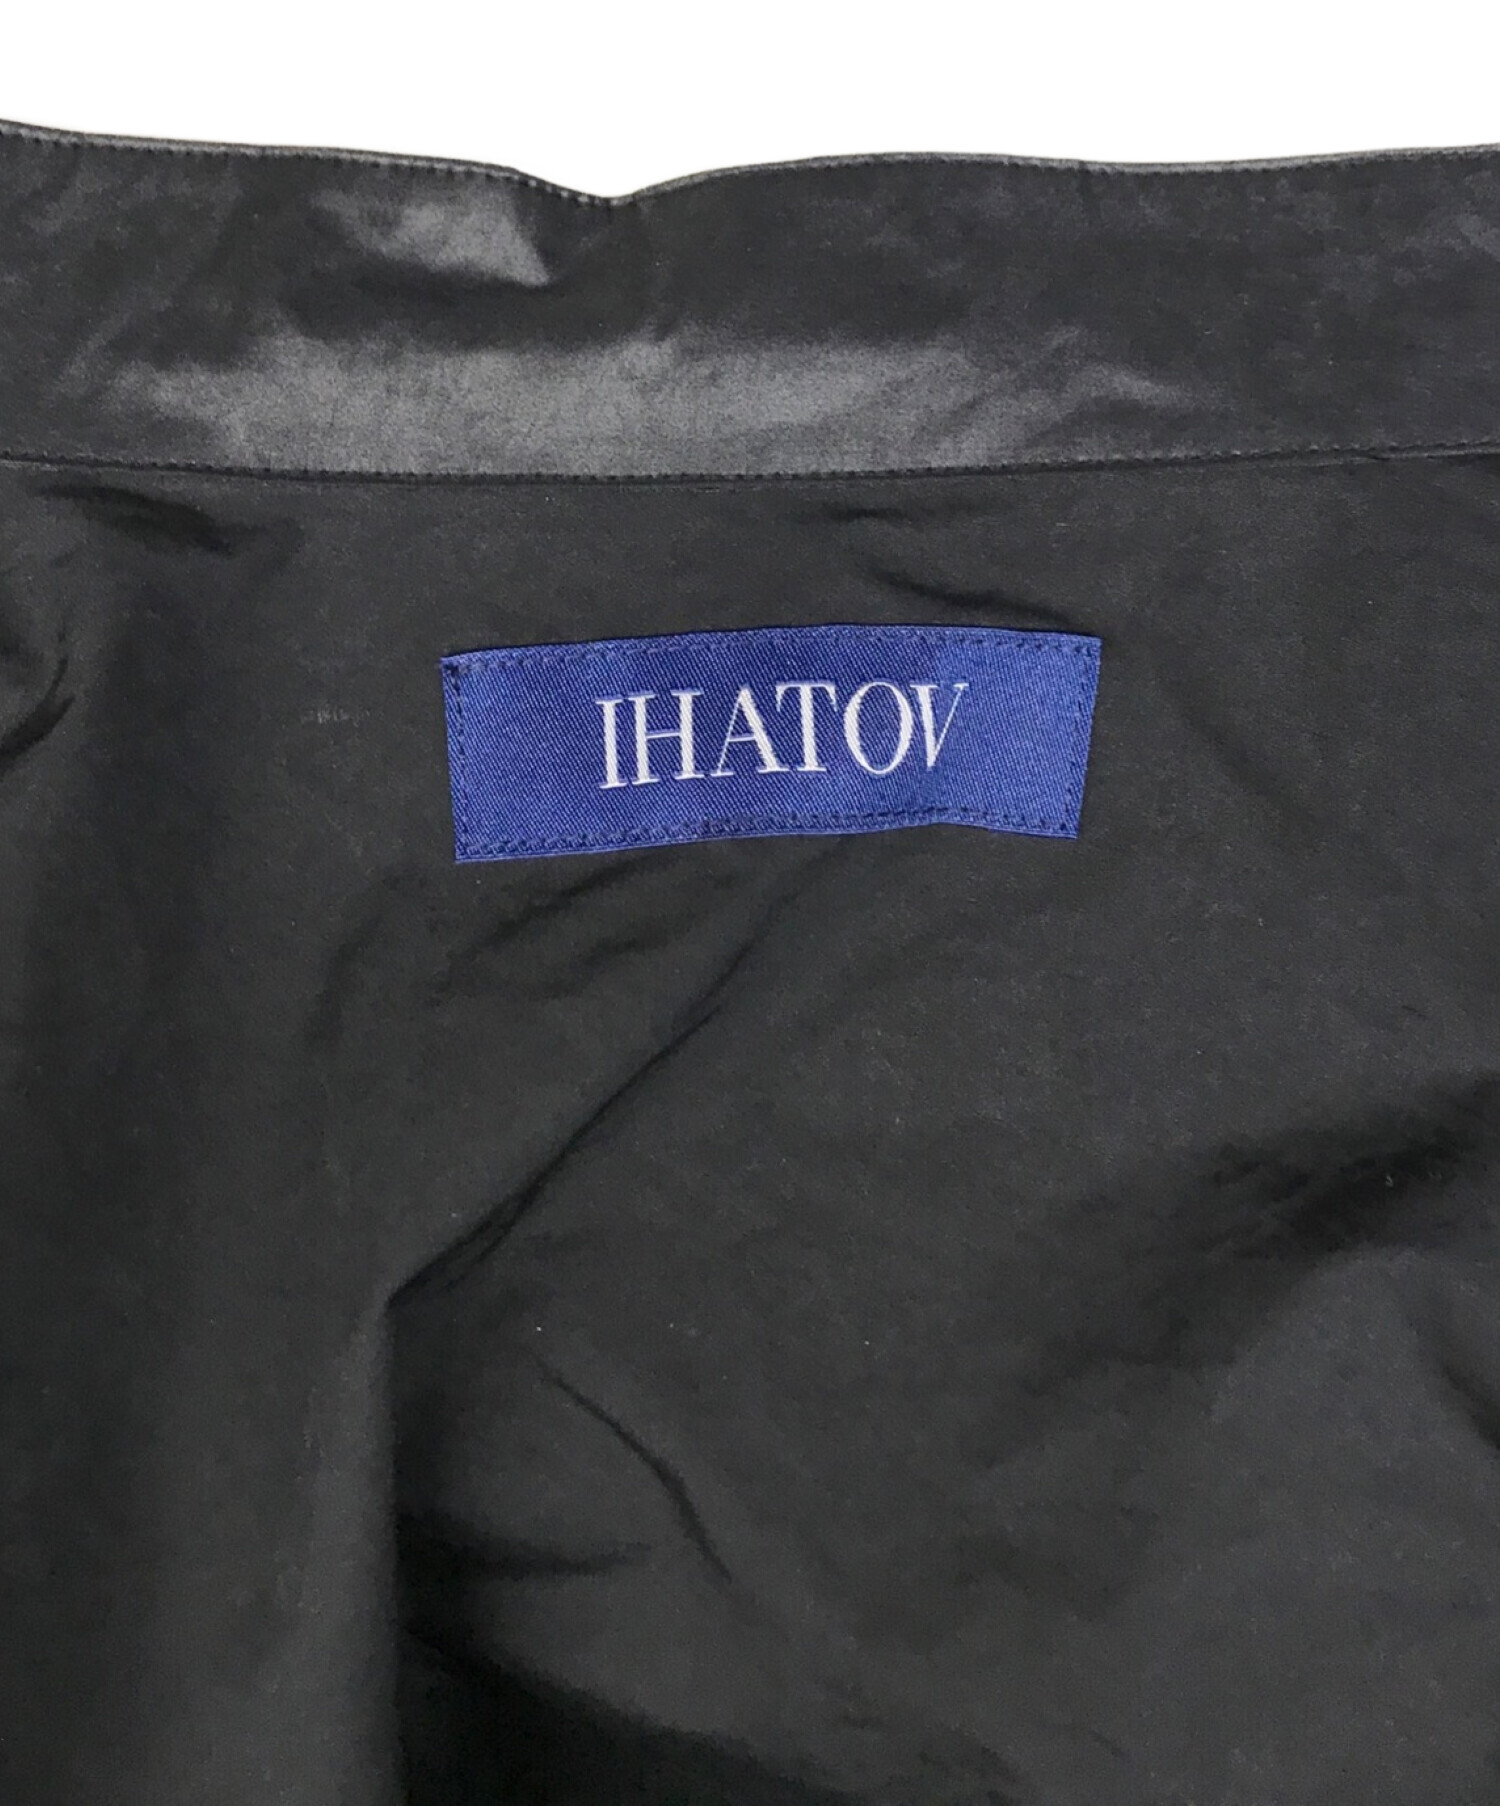 IHATOV (イーハトーブ) スタンドカラージャケット ブラック サイズ:S 未使用品